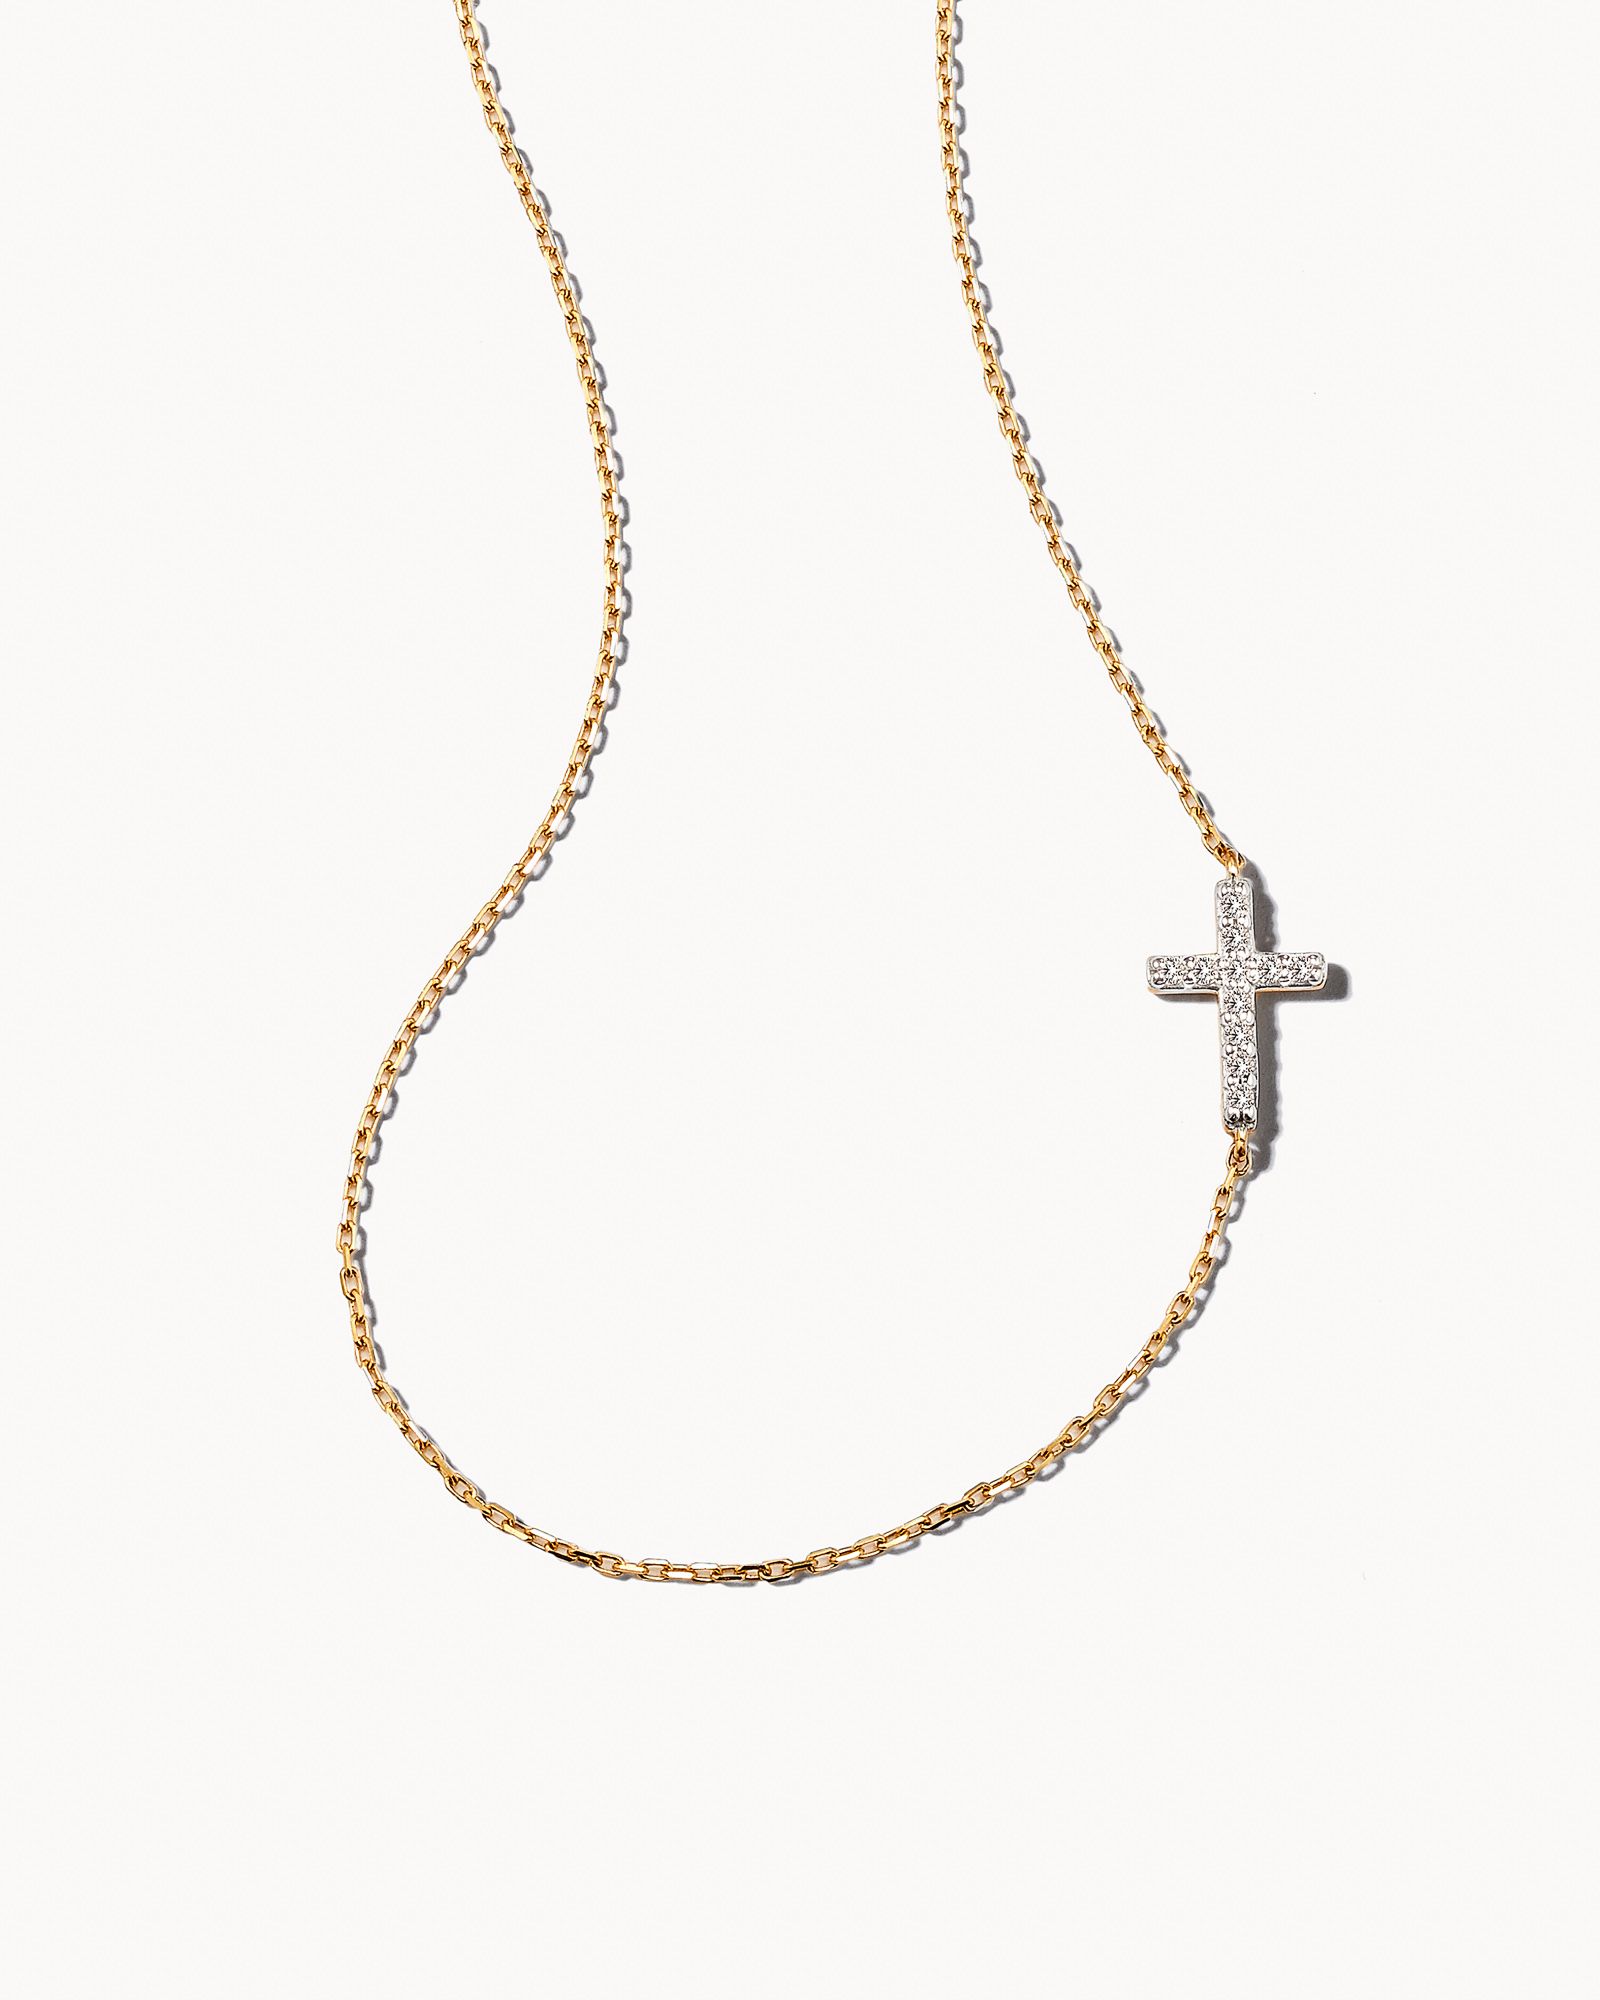 Cross Strand Necklace in 14k Yellow Gold | Kendra Scott | Kendra Scott